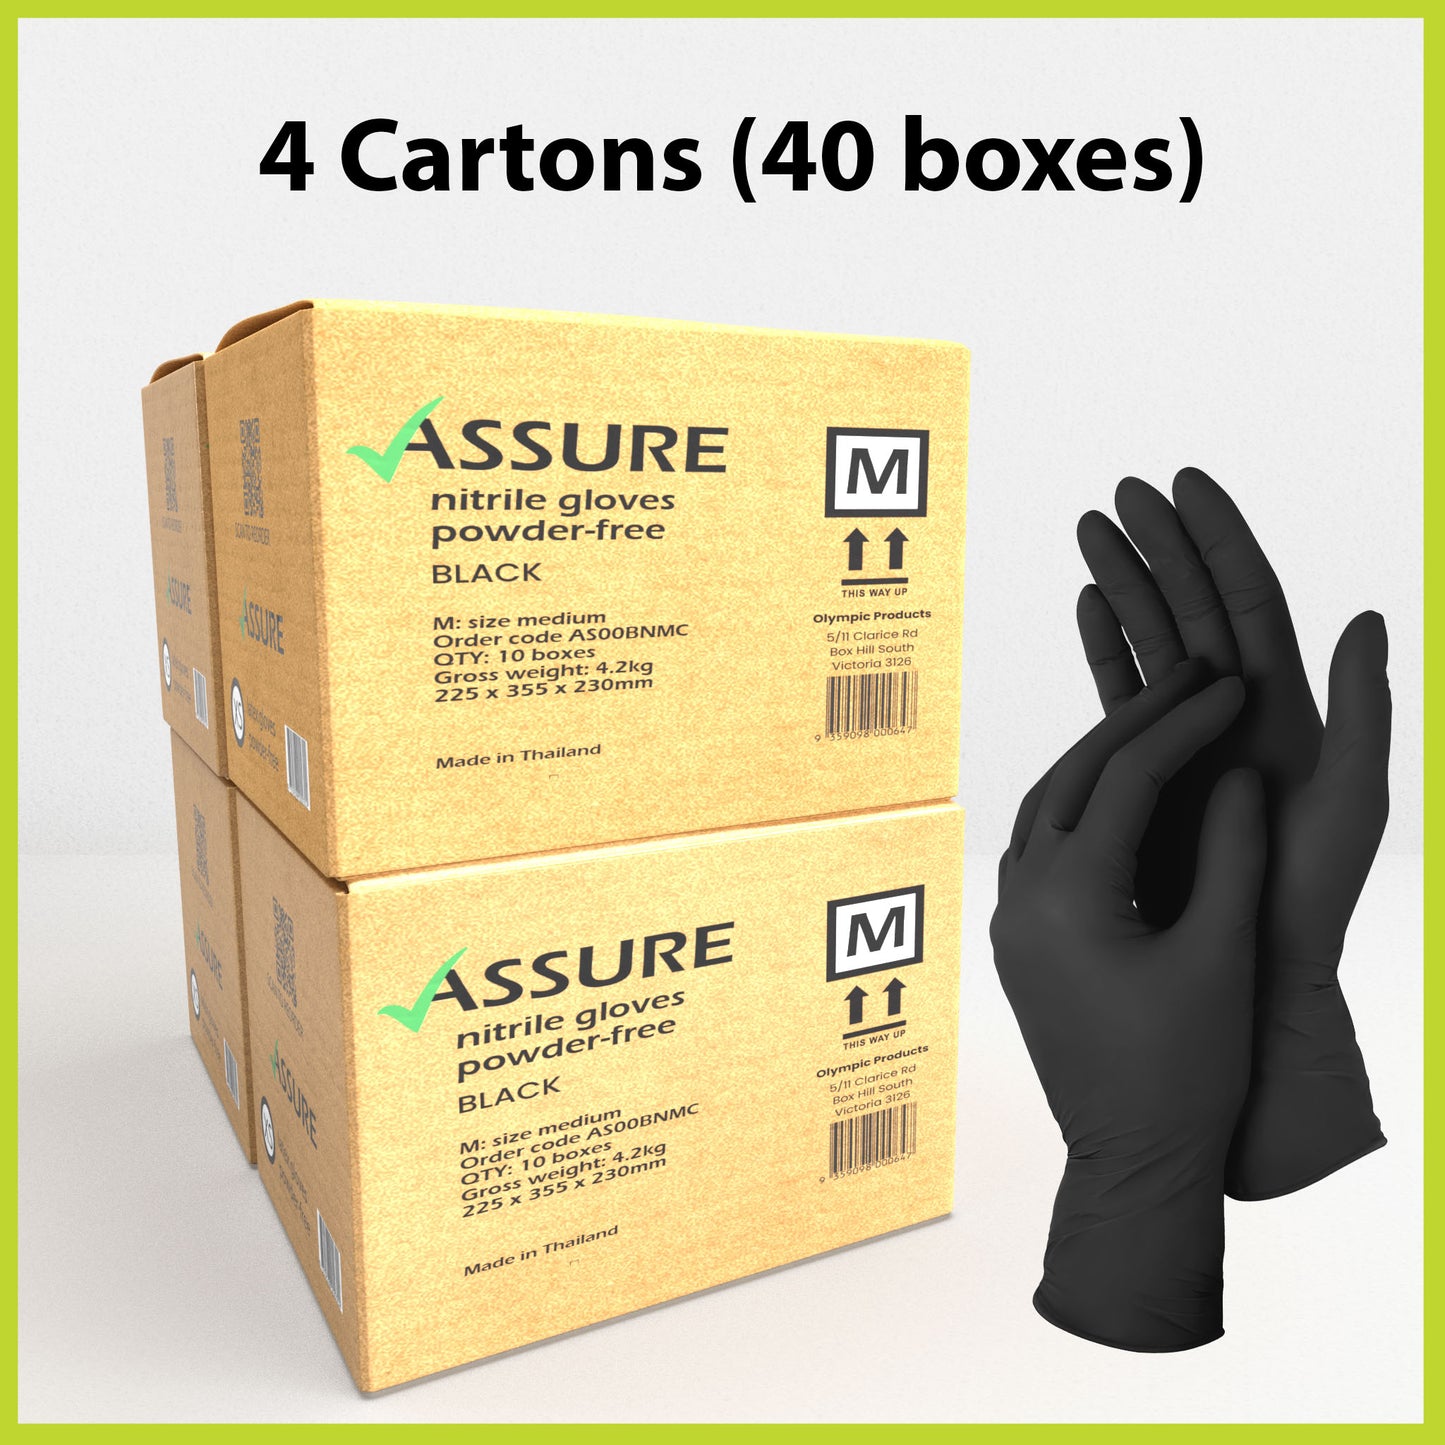 Bulk Saver - ASSURE Black Nitrile Gloves, 4 cartons @ $5.50 per box